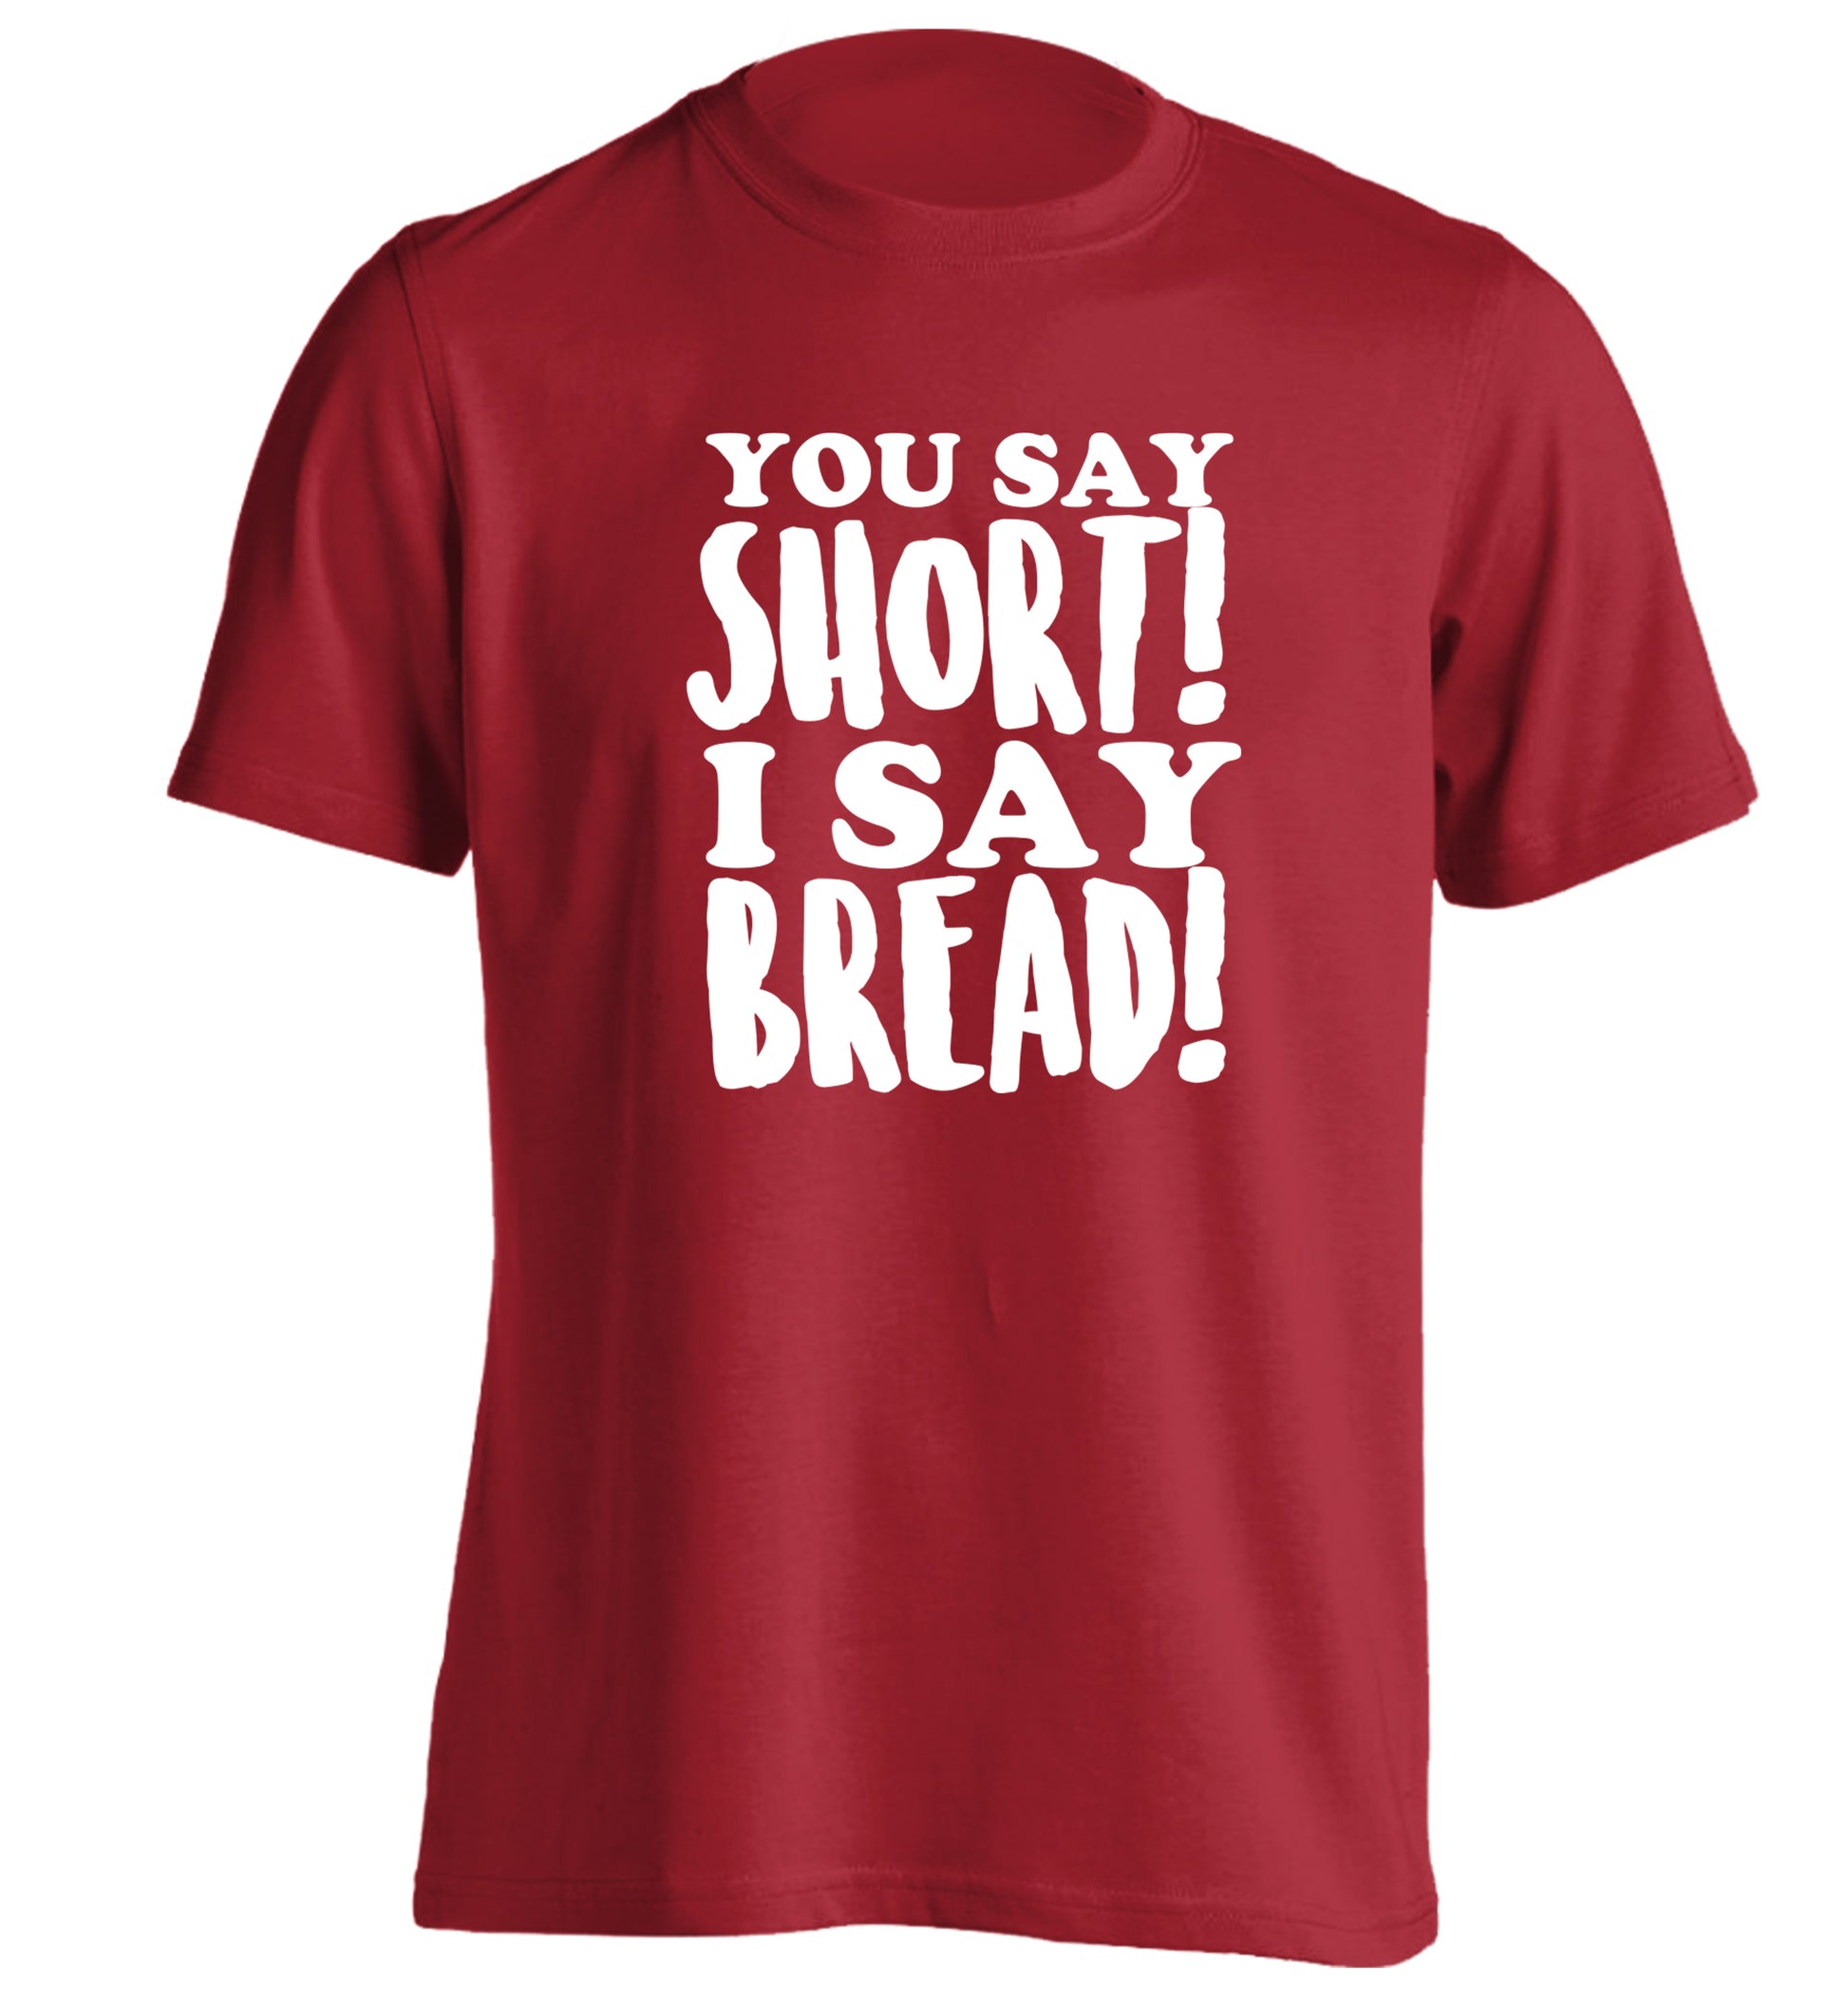 You say short I say bread! adults unisex red Tshirt 2XL